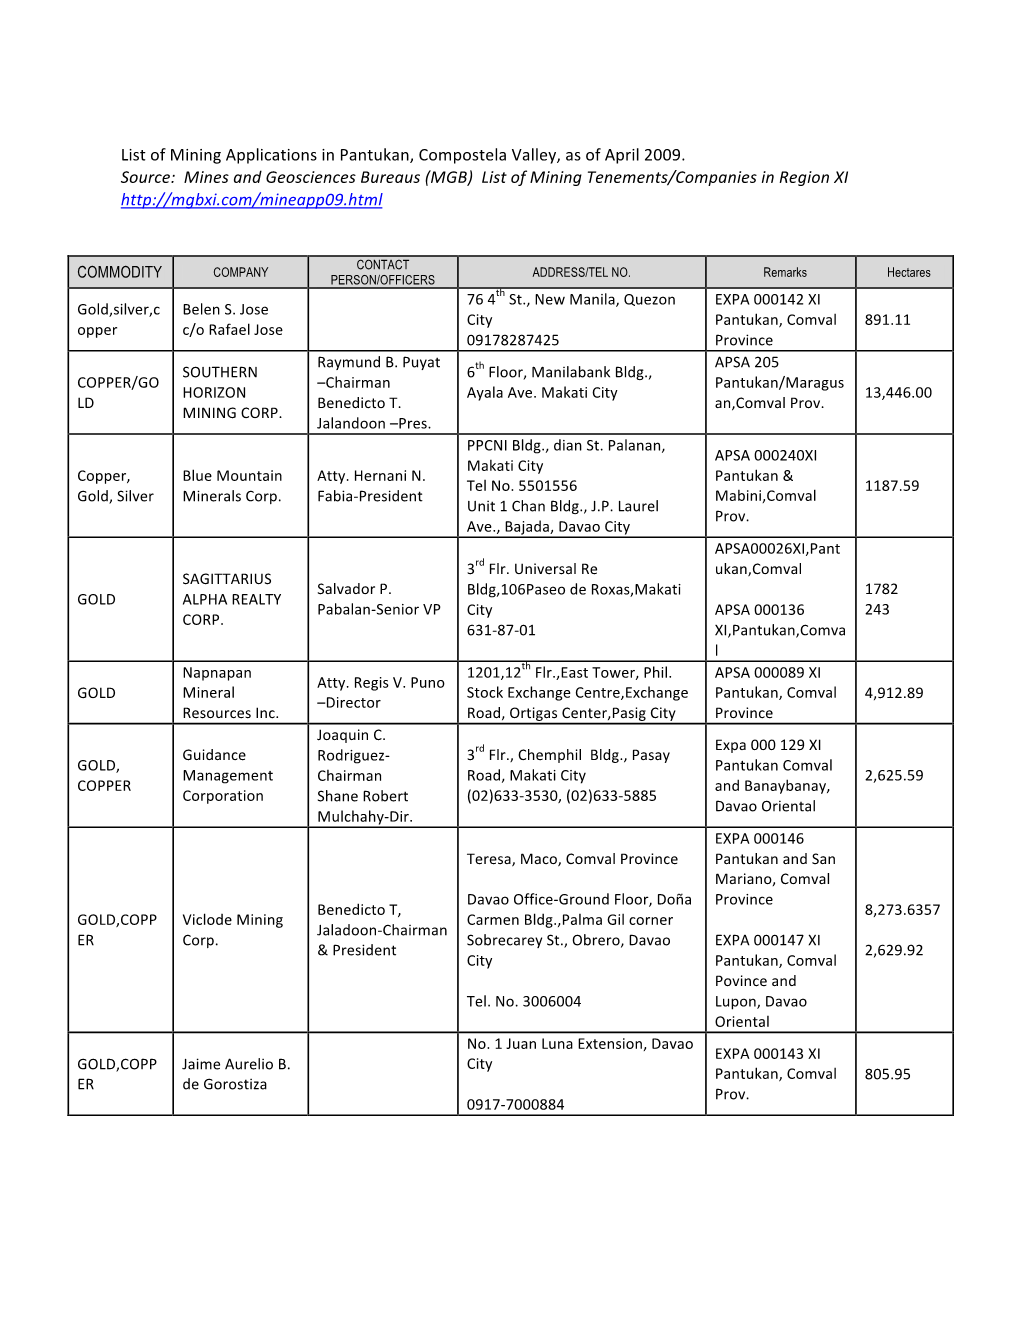 List of Mining Applications in Pantukan, Compostela Valley, As of April 2009. S